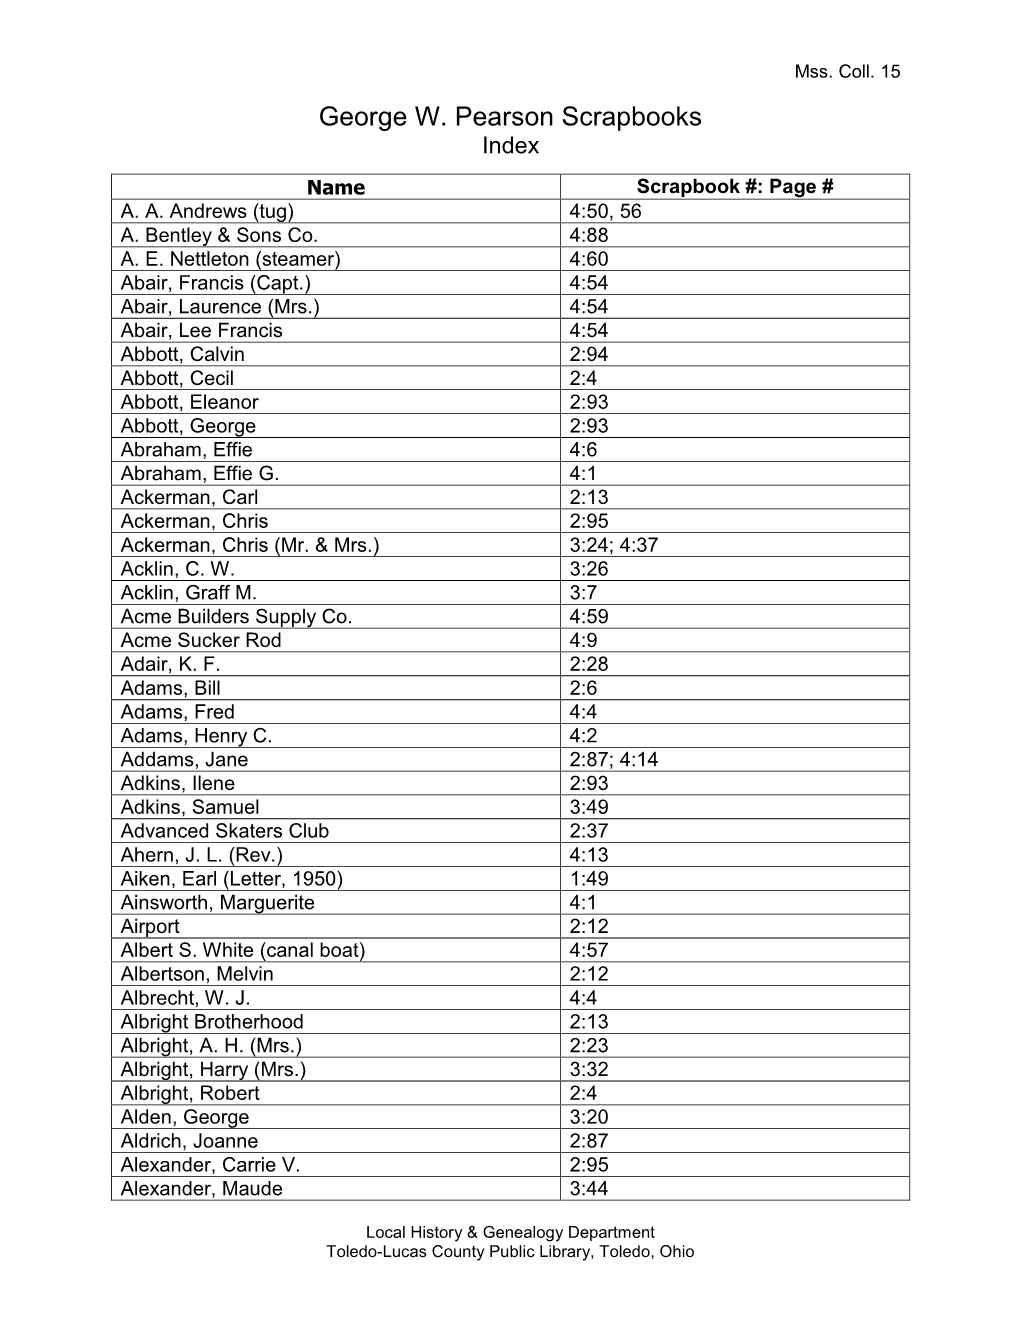 George W. Pearson Scrapbooks Index